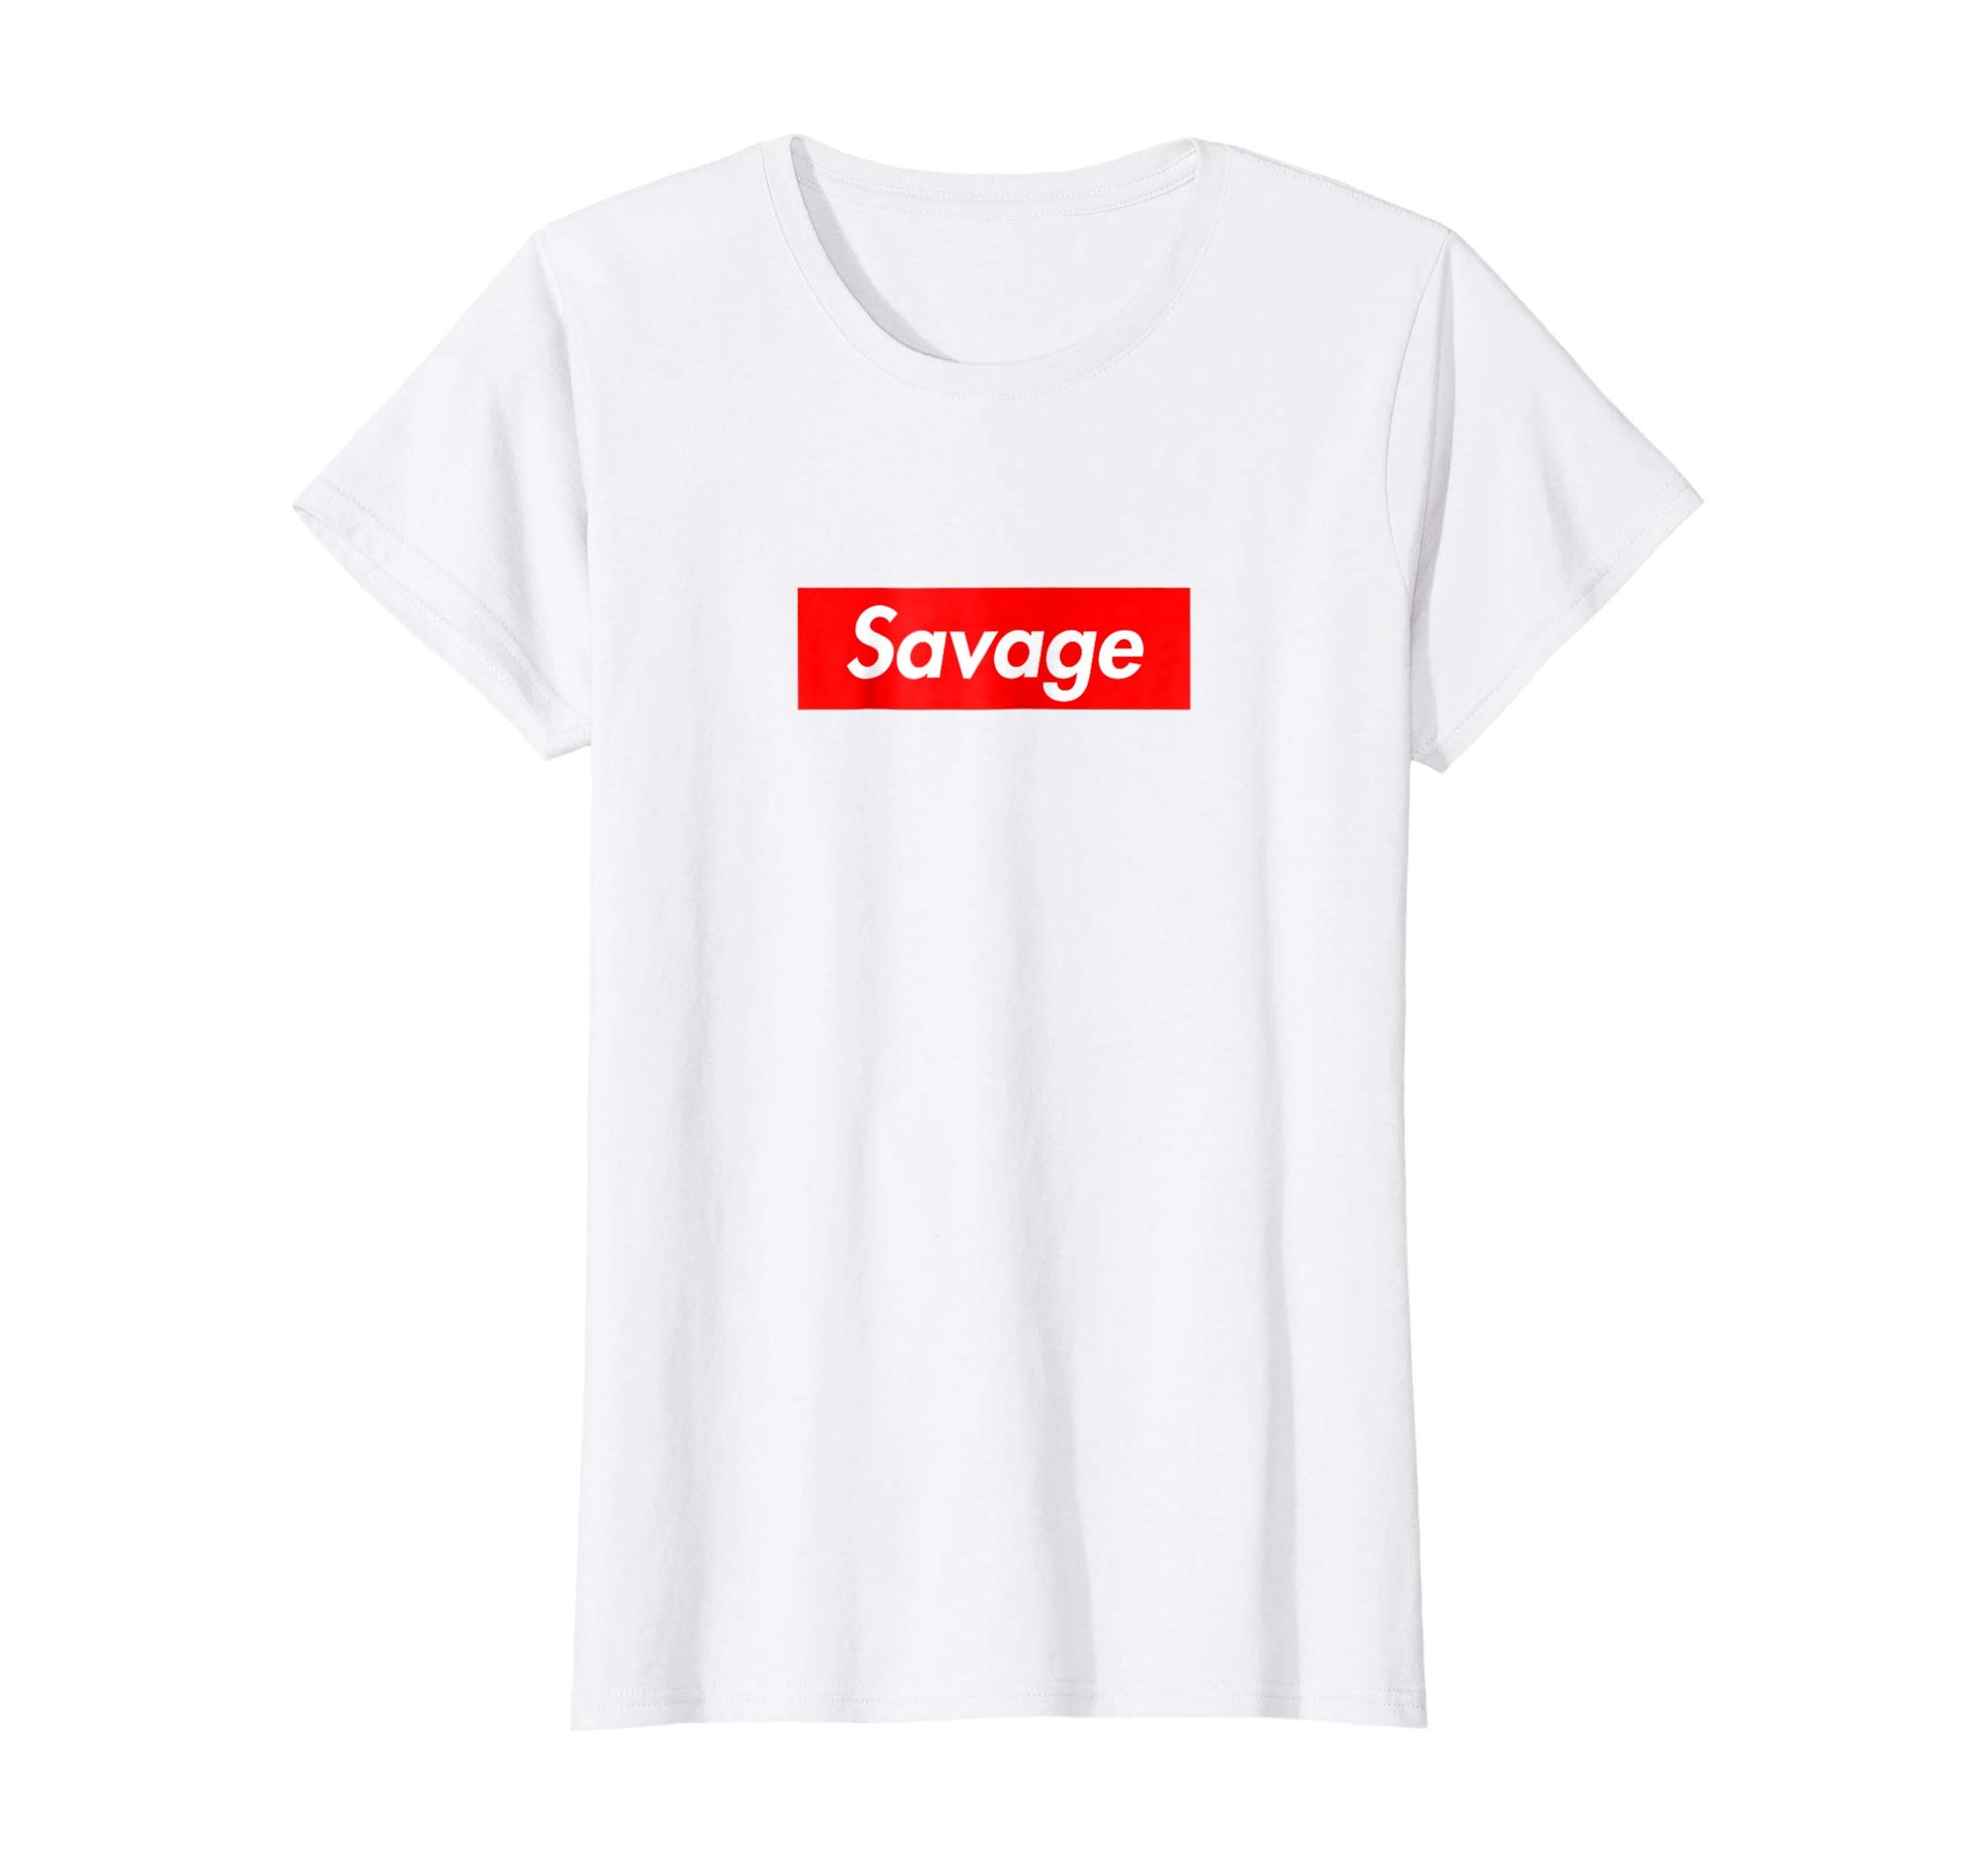 savage t shirt dress